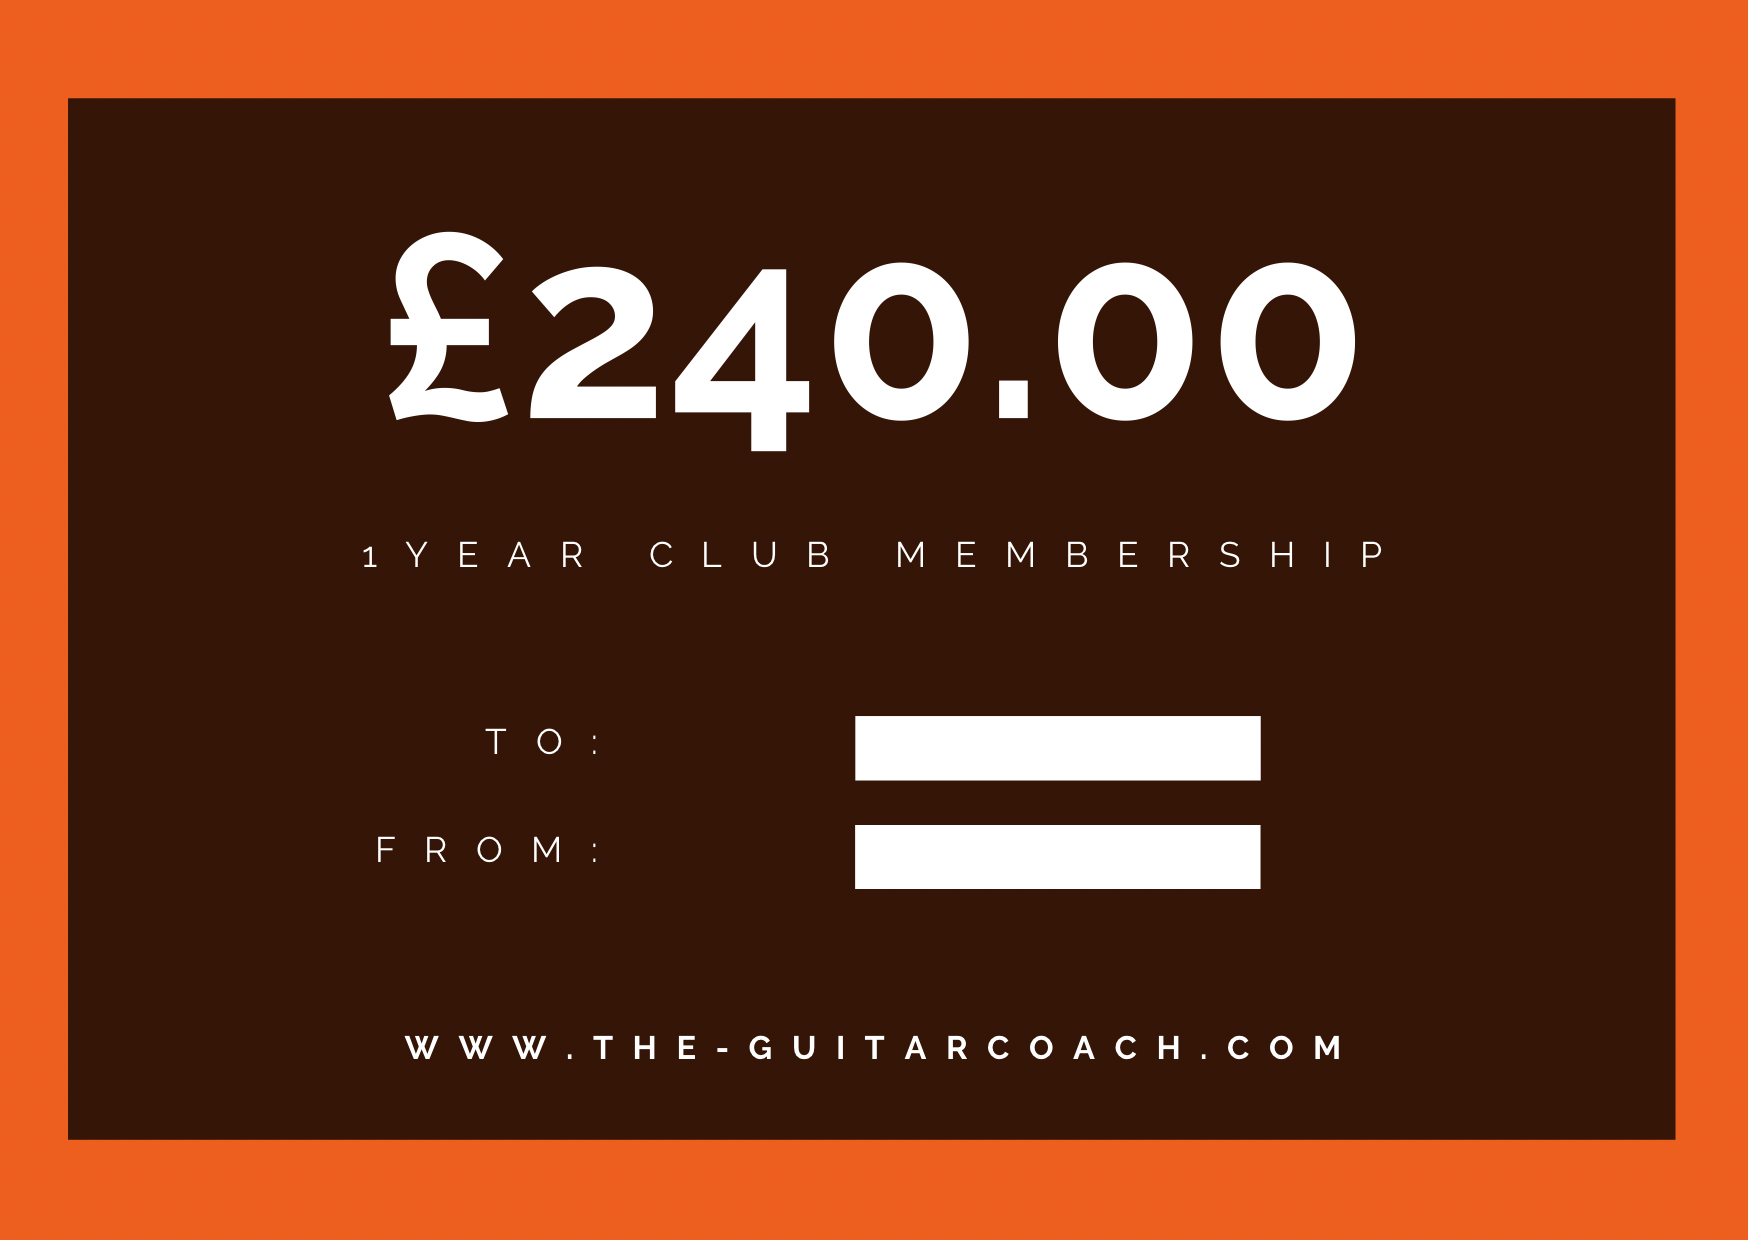 1 Year Guitar Club Membership